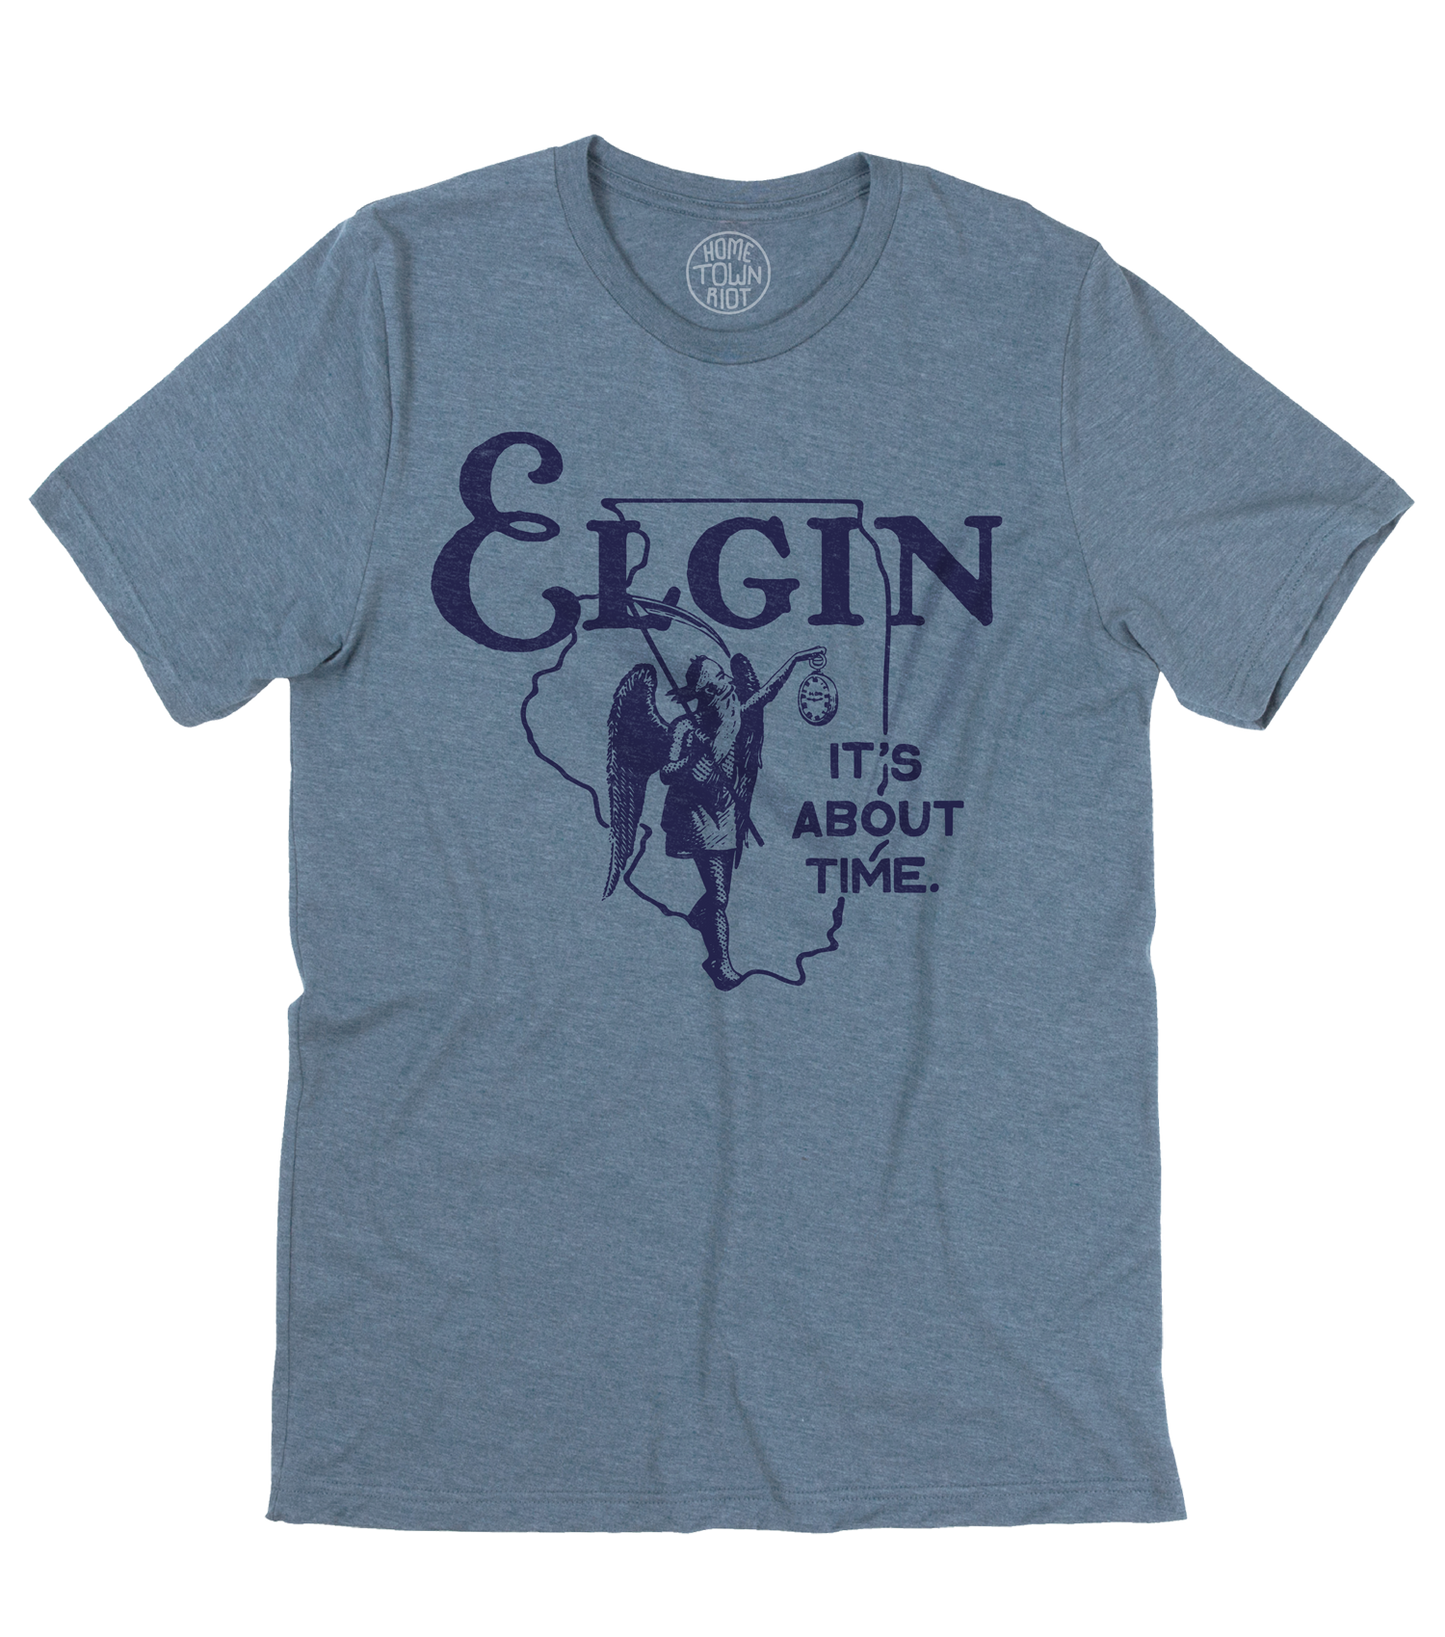 Elgin Illinois Shirt